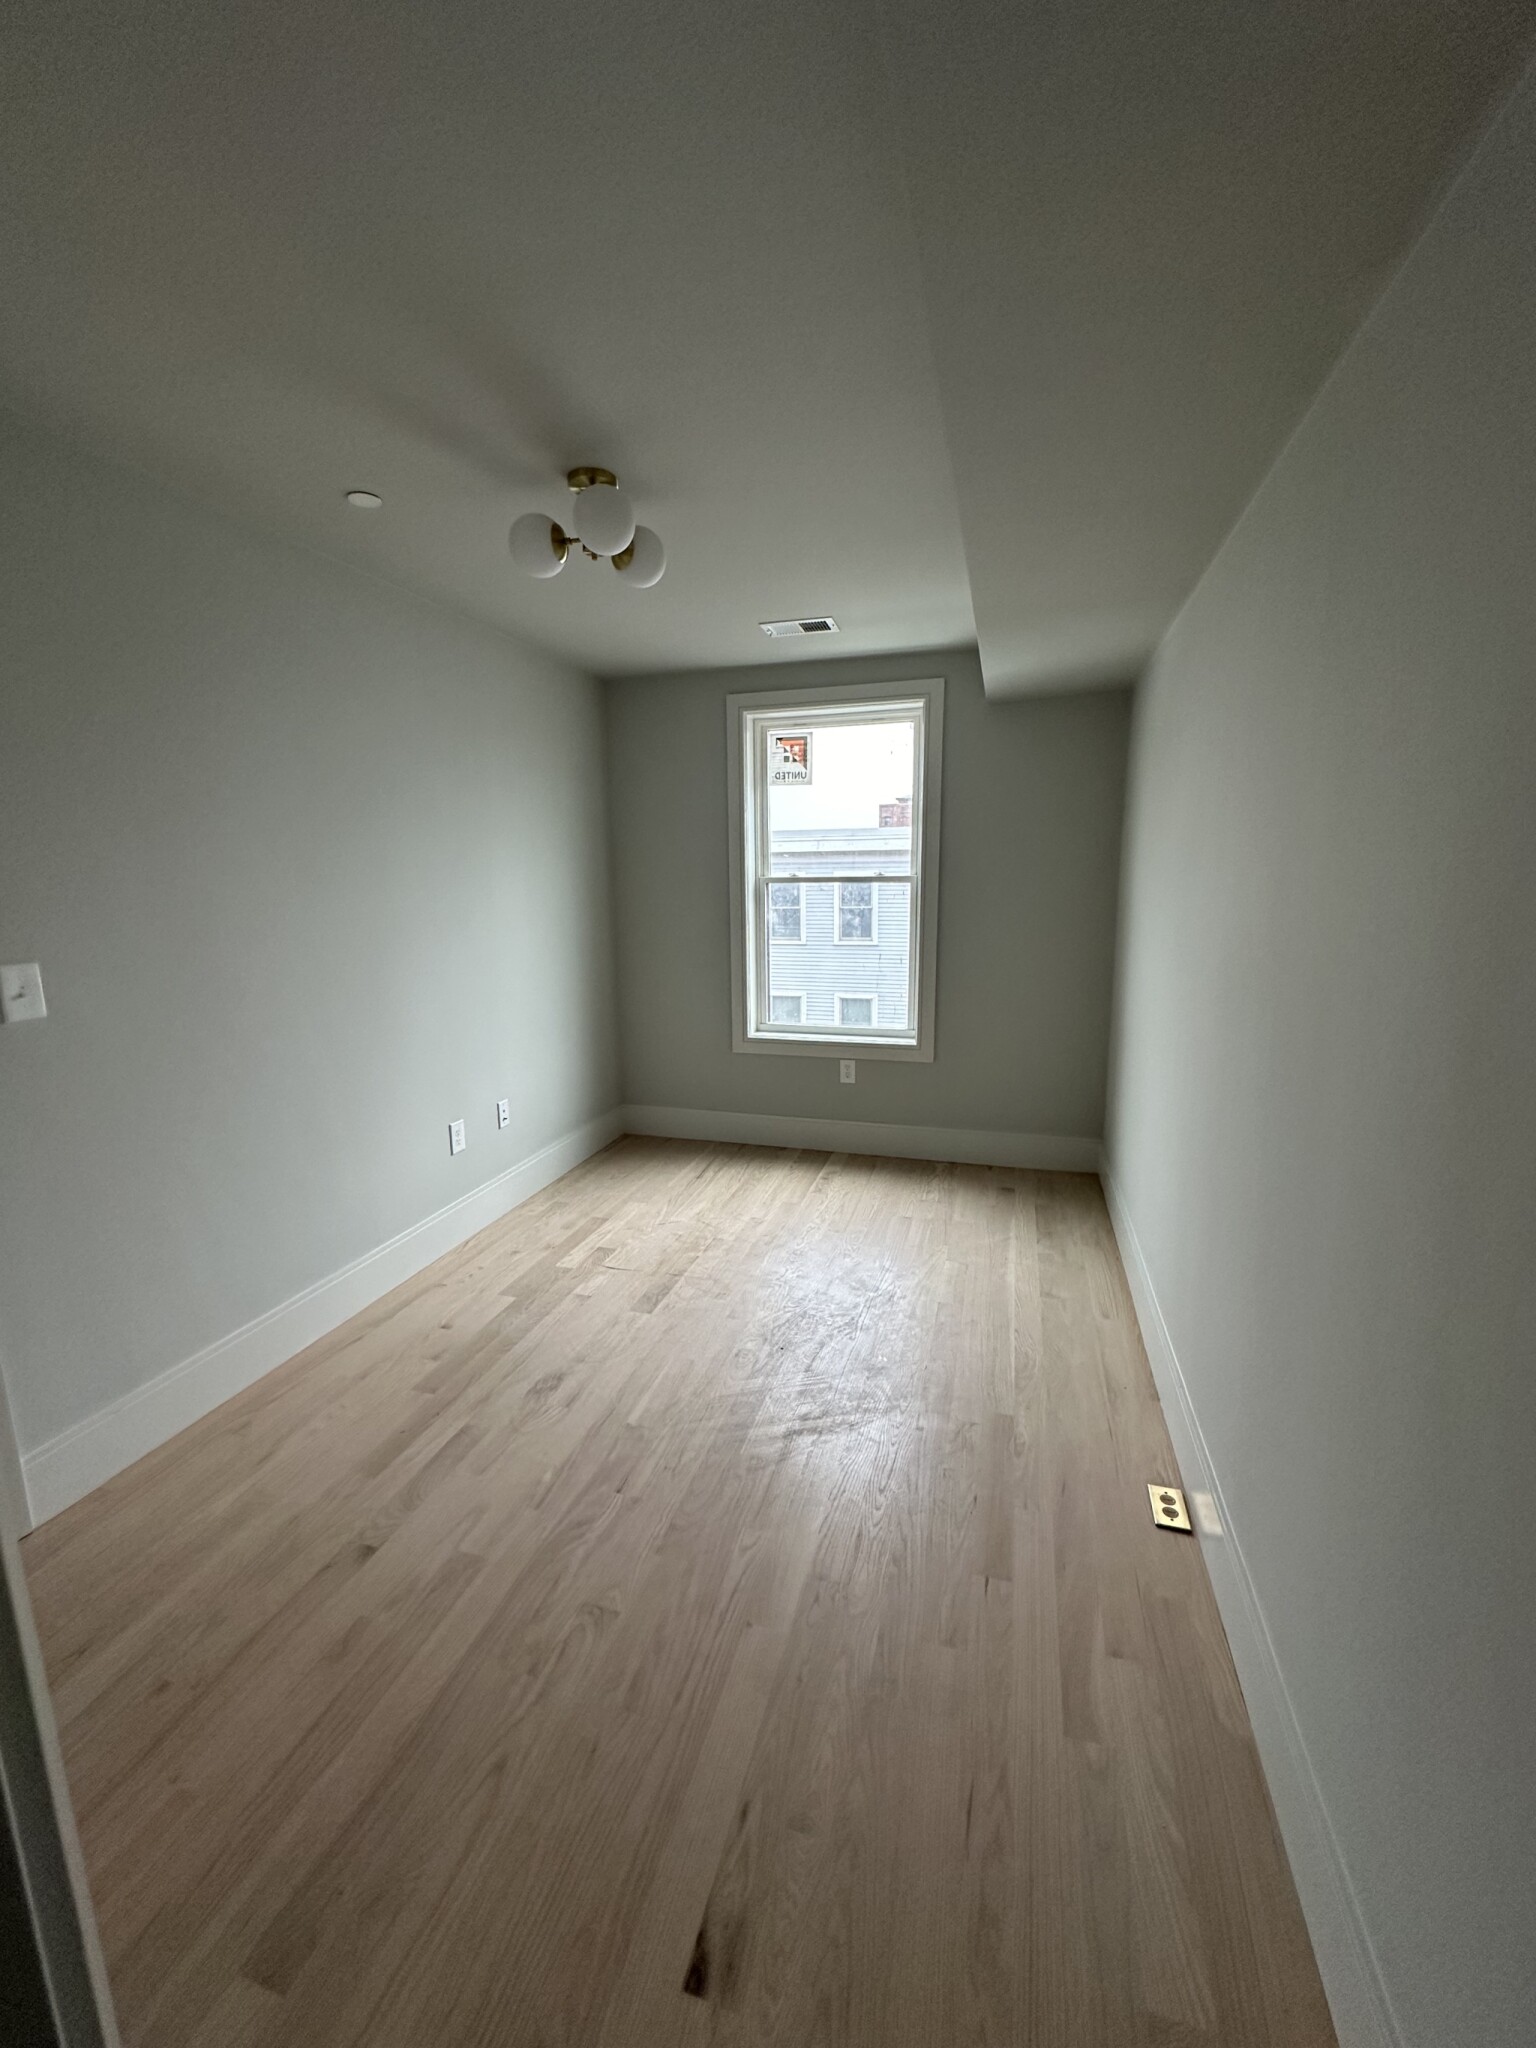 Photos of apartment on Maverick,Boston MA 02128